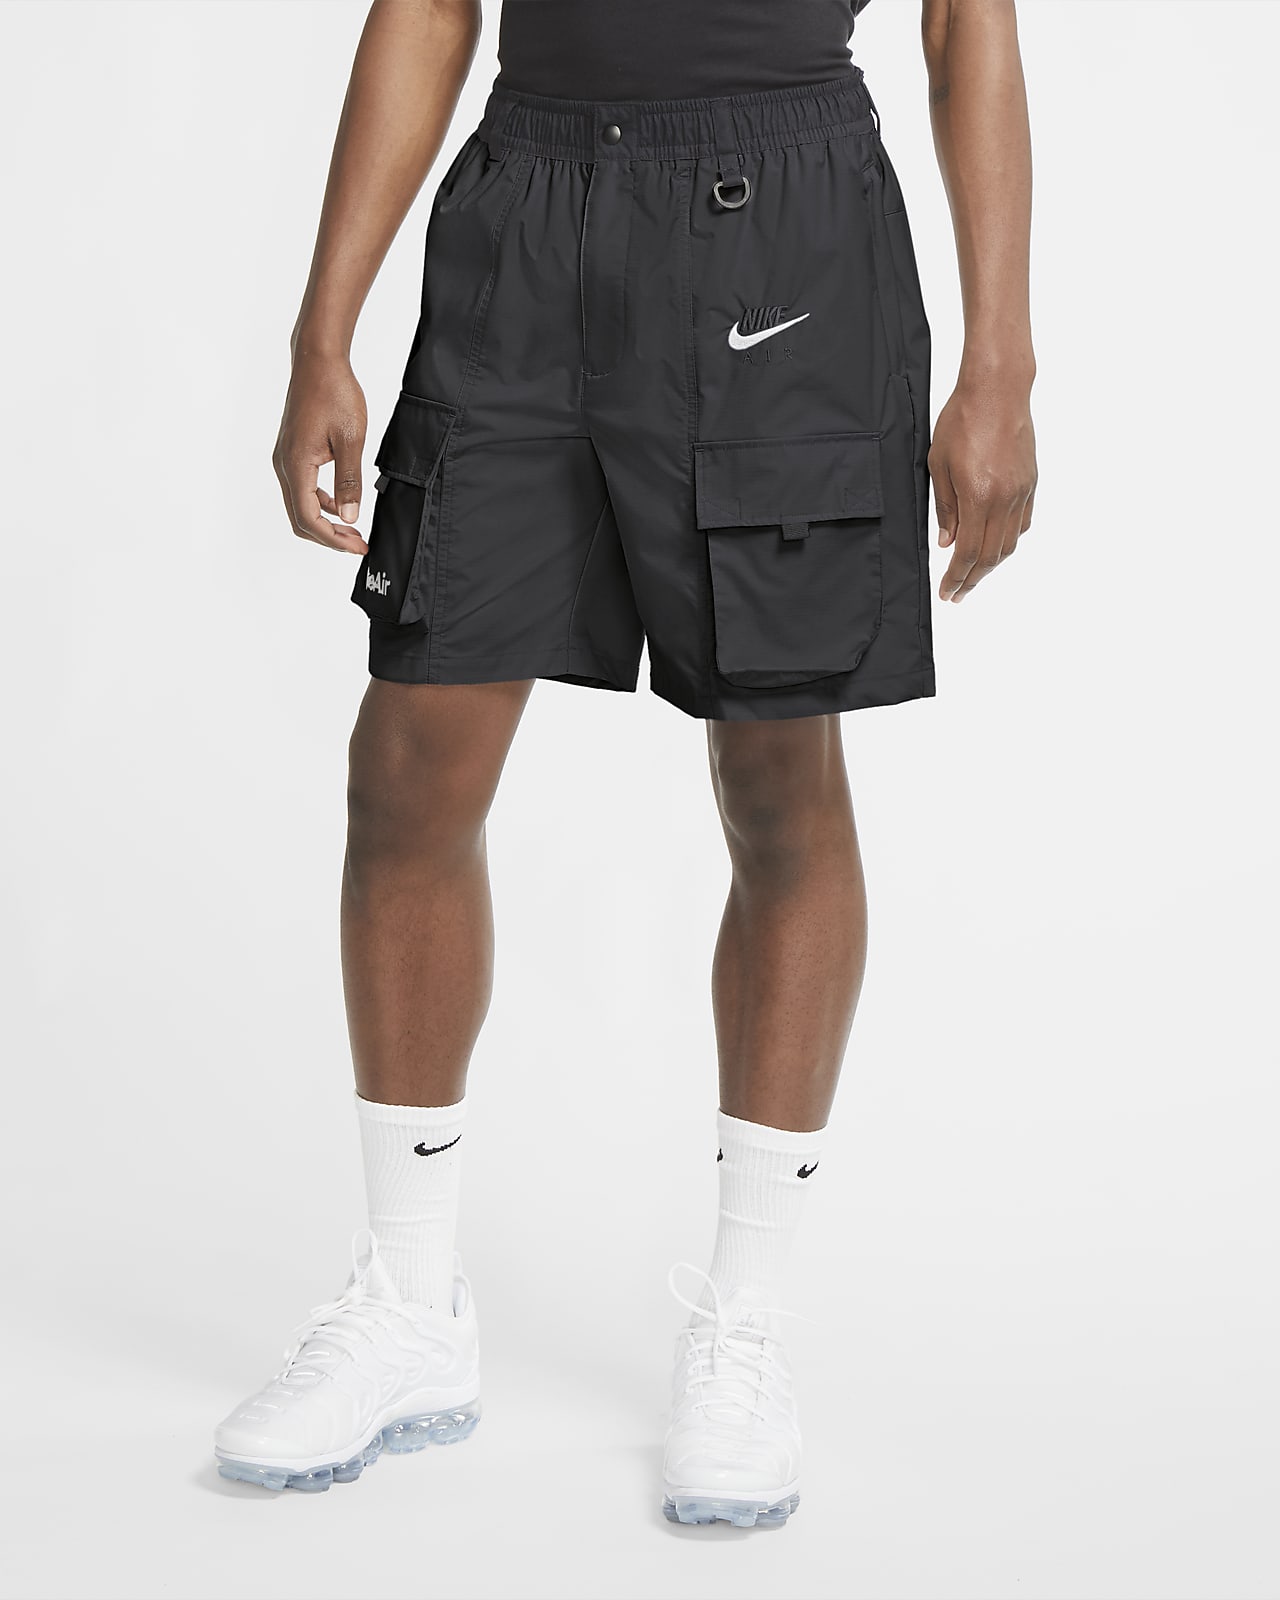 Nike Air Men's Shorts. Nike FI